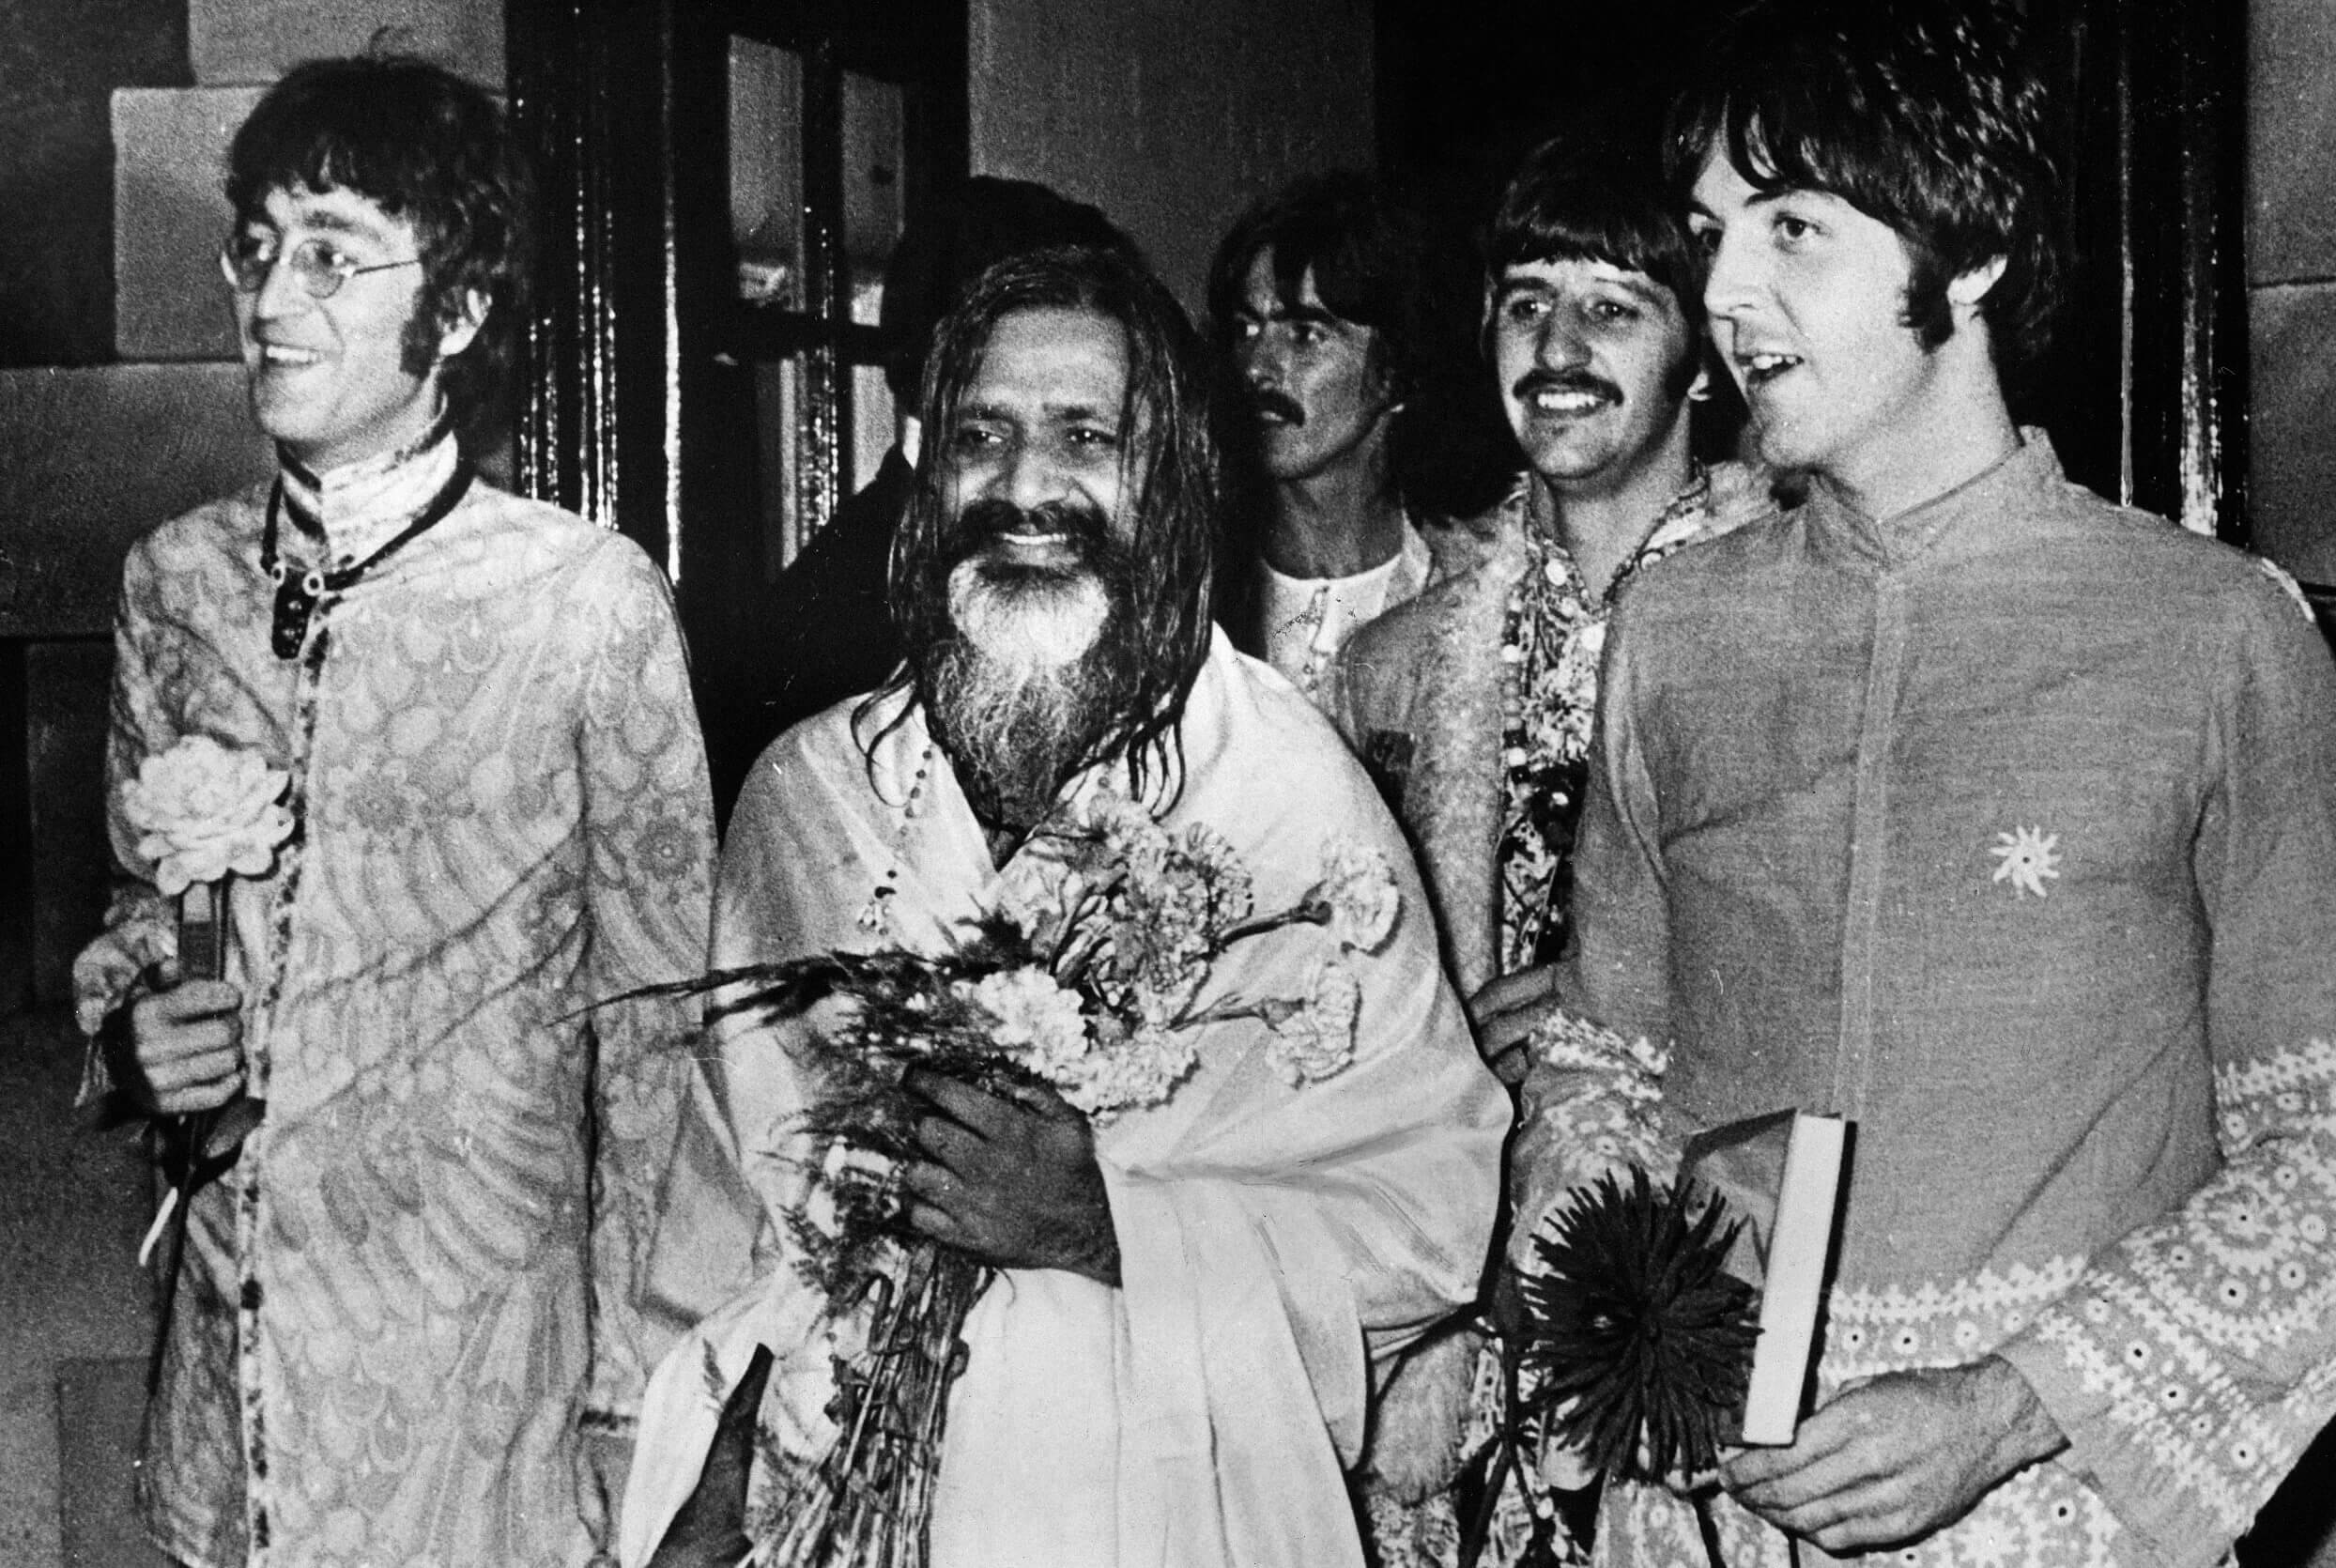 The Beatles and the Maharishi Mahesh Yogi in black-and-white